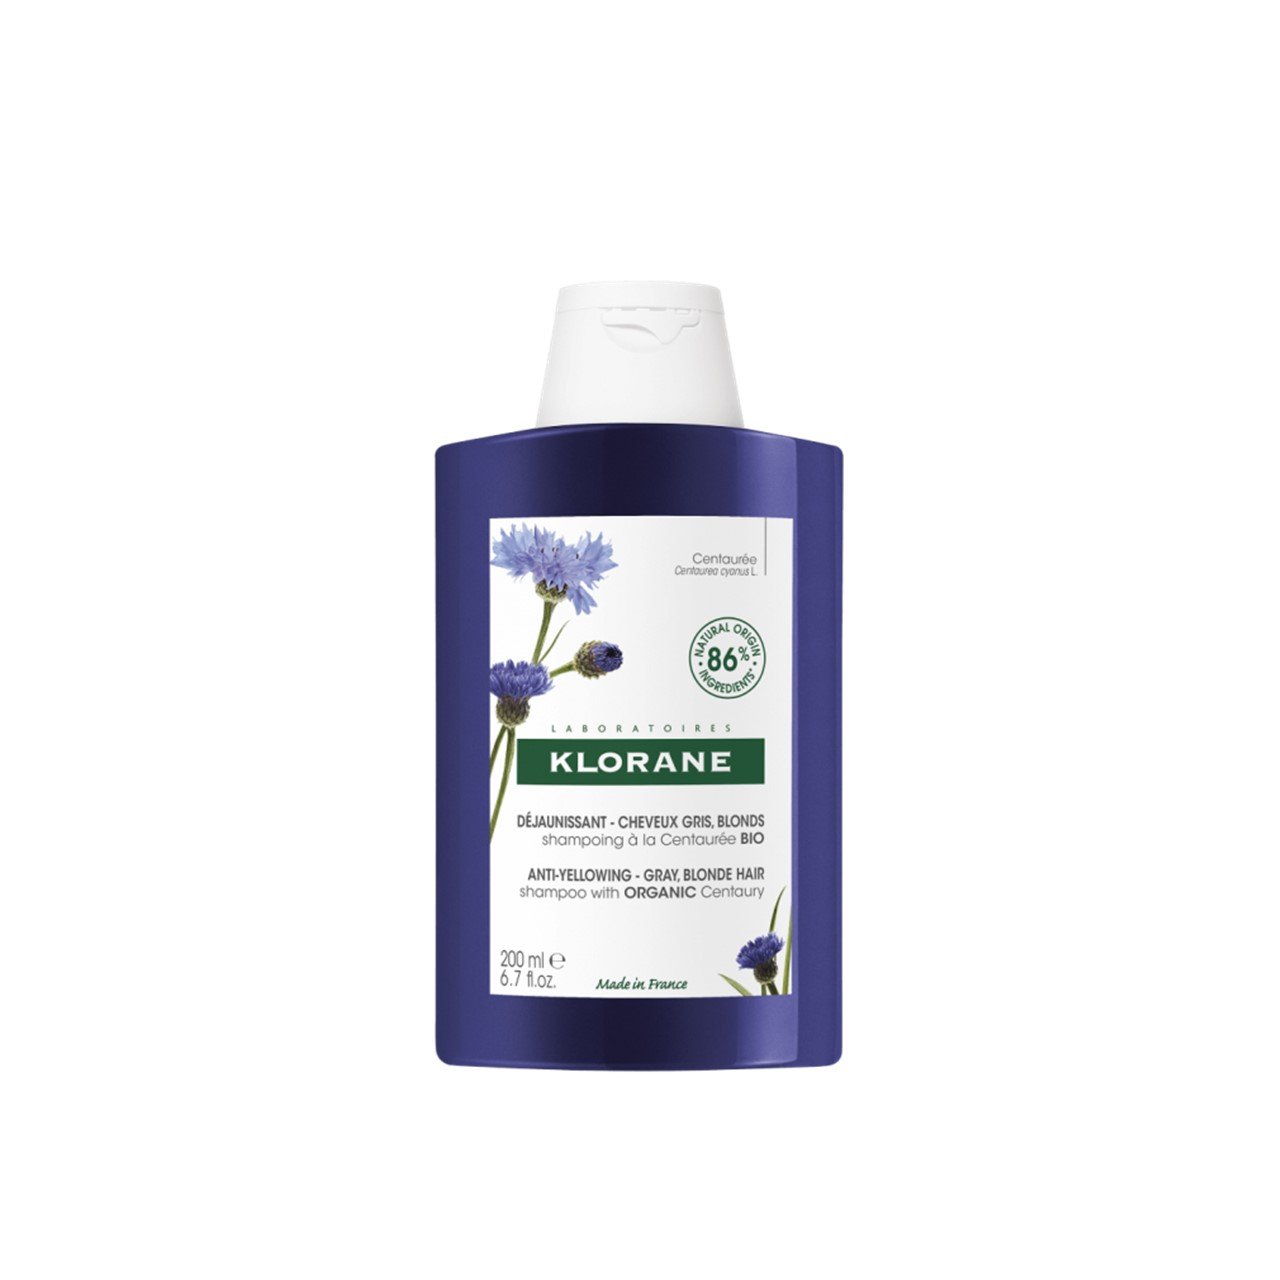 Klorane Anti-Yellowing Shampoo with Centaury 200ml (6.76fl oz)